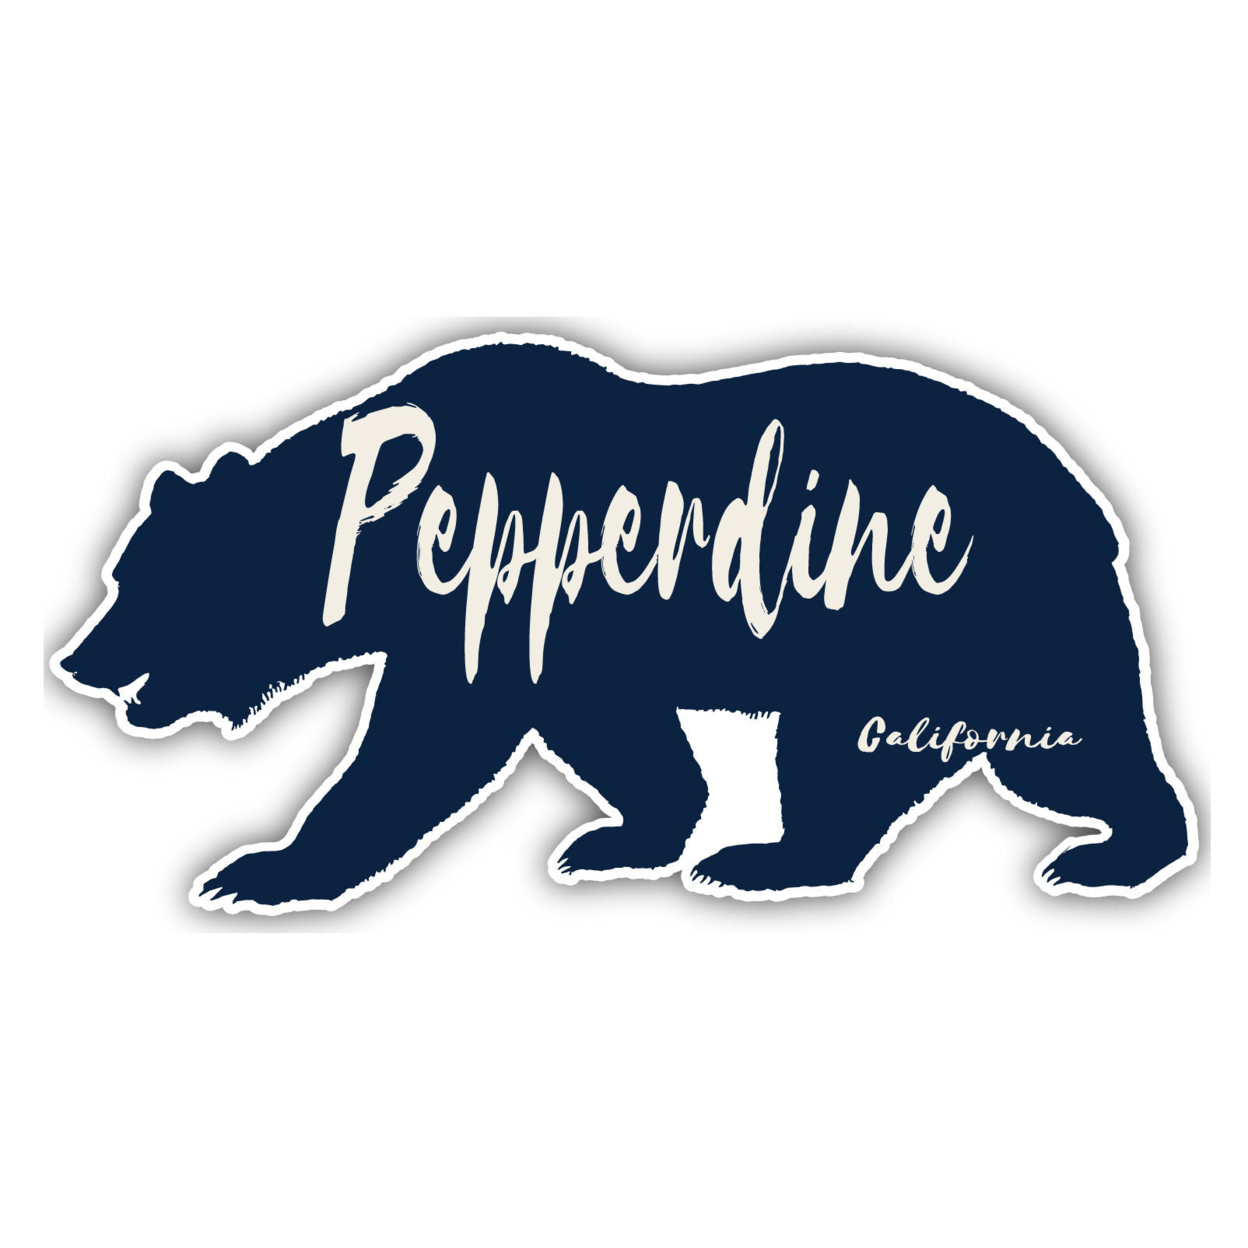 Pepperdine California Souvenir Decorative Stickers (Choose Theme And Size) - Single Unit, 2-Inch, Tent